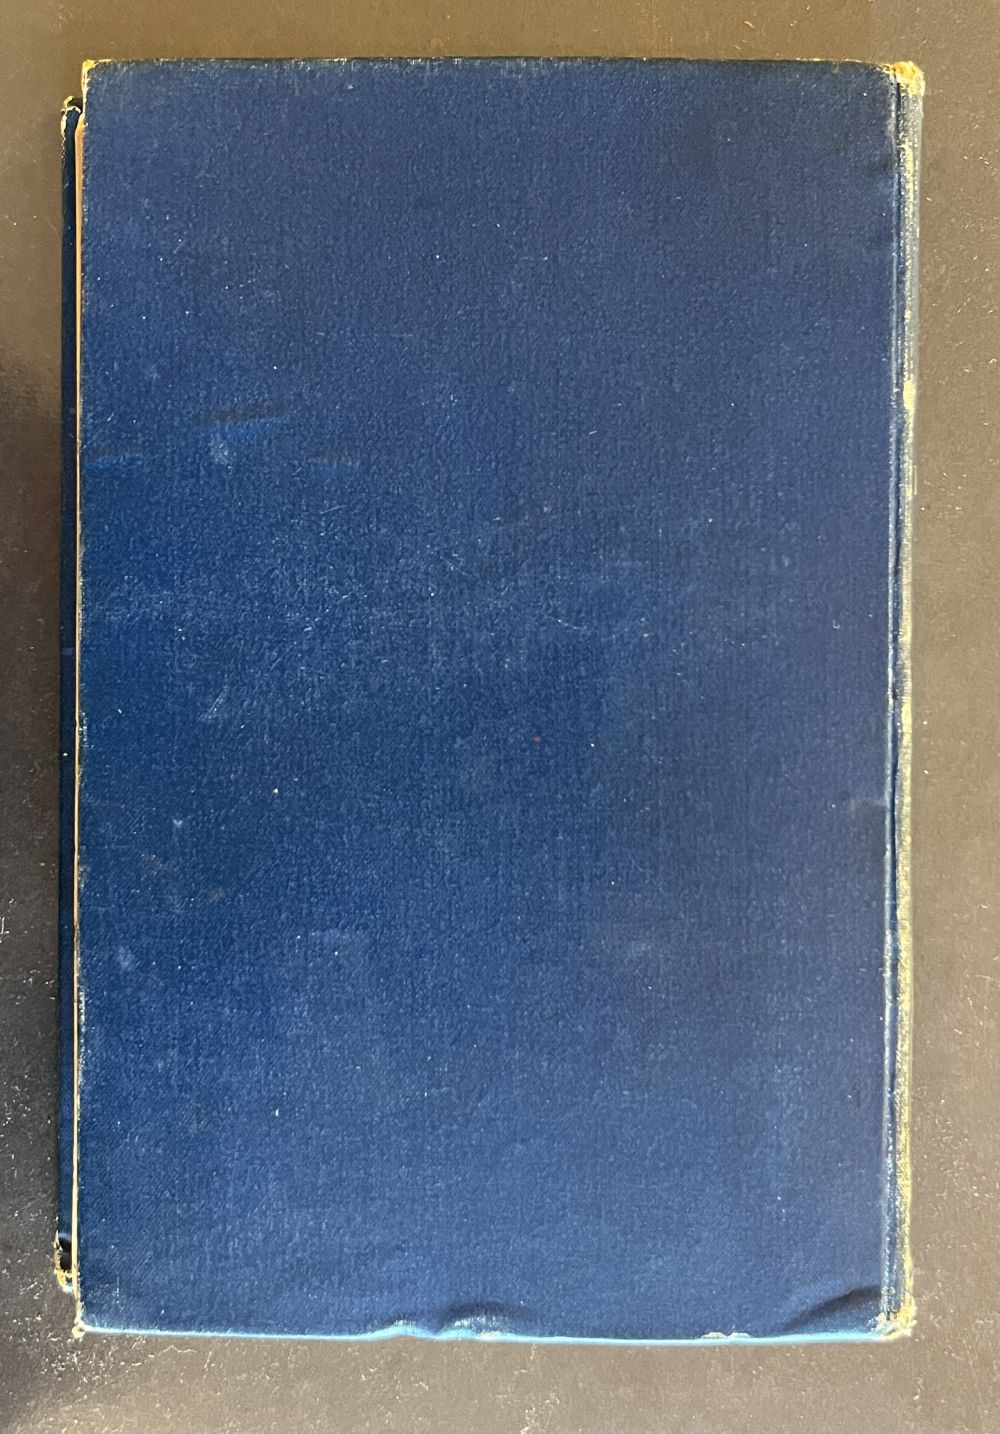 Kipling (Rudyard). The Jungle Book, 1st edition, 1894 - Image 4 of 13